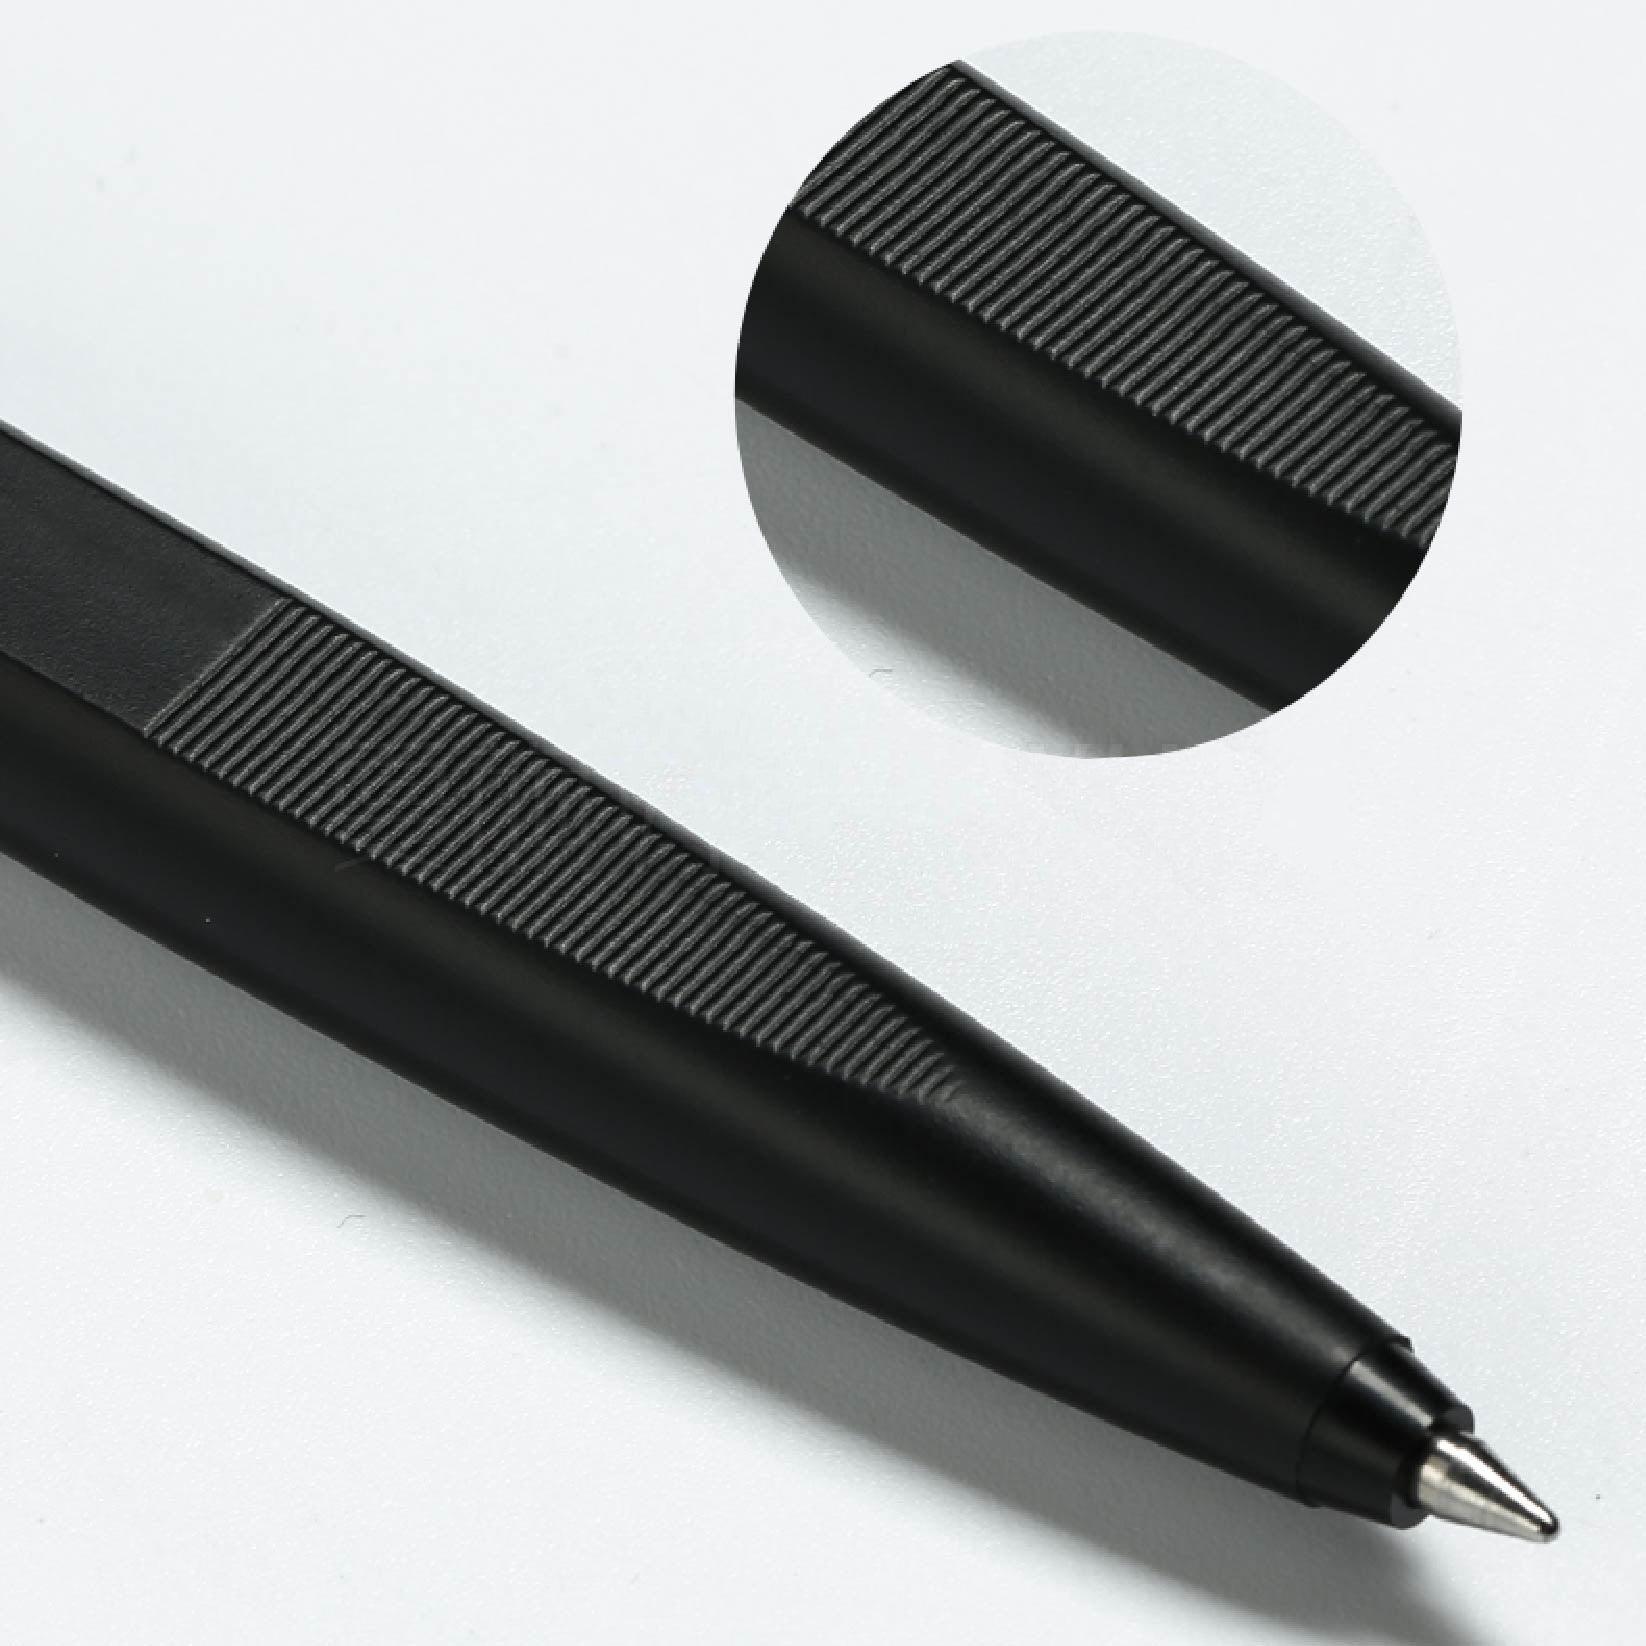 UNI BOXY100 BX100.24 Black Rod Black Ink Oil Pen 0.7mm S-7S Refill Black Refill S7S.24 - CHL-STORE 